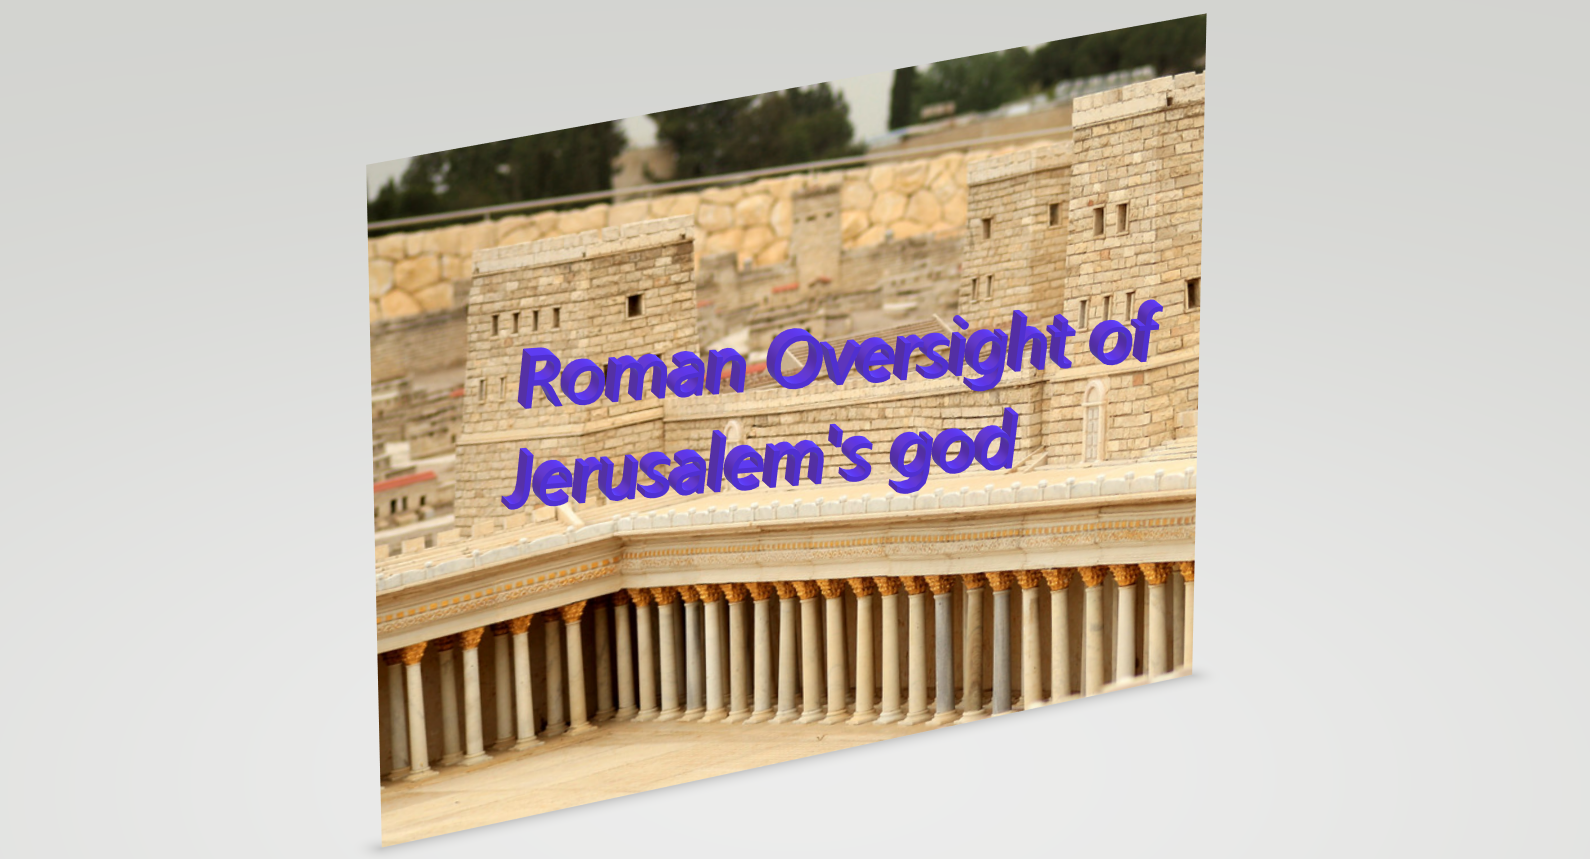 Roman Oversight of Jerusalem’s god